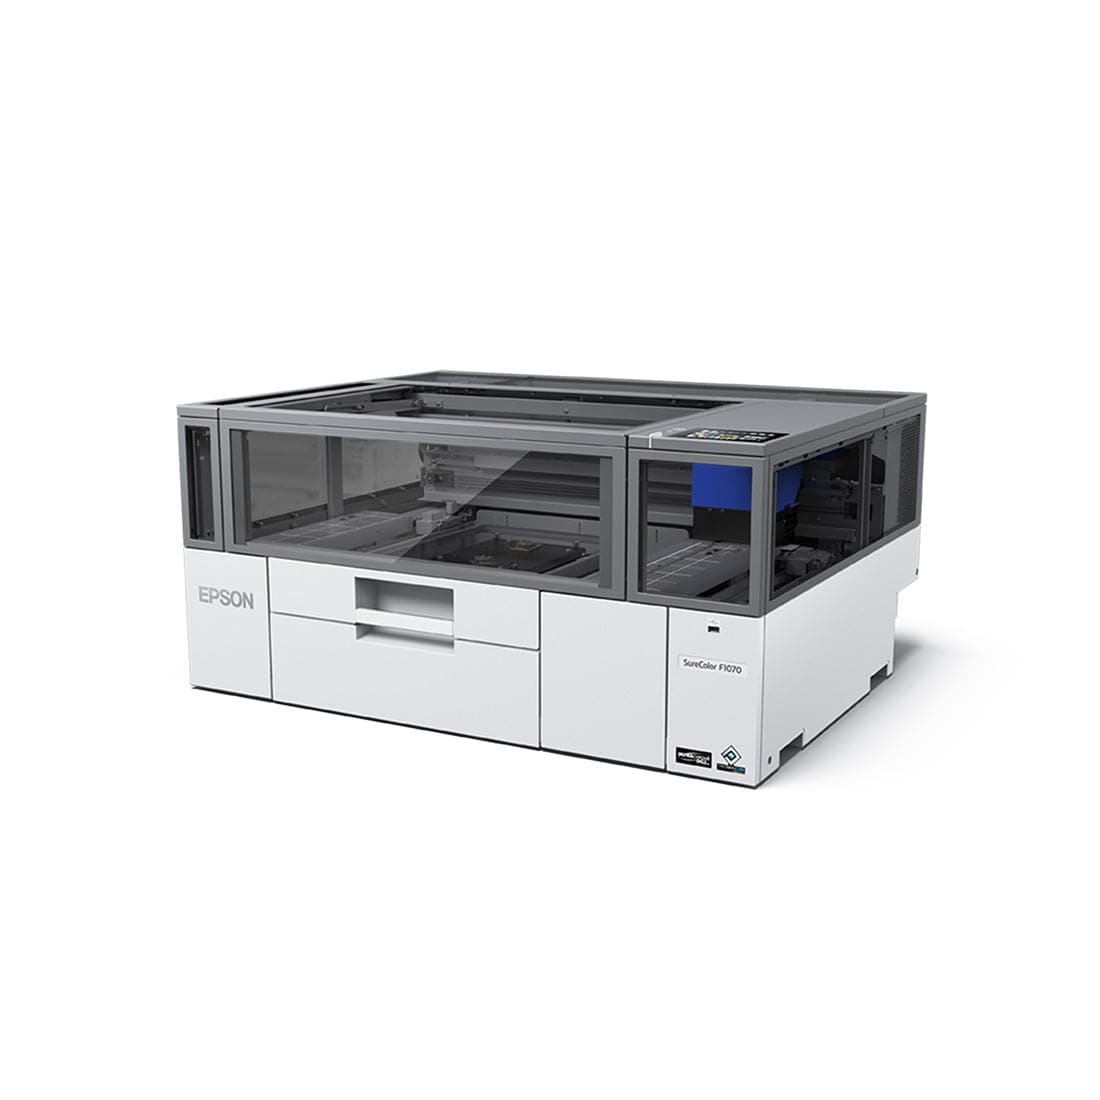 Epson® F1070 Hybrid Printer DTG / DTF - Joto Imaging Supplies US